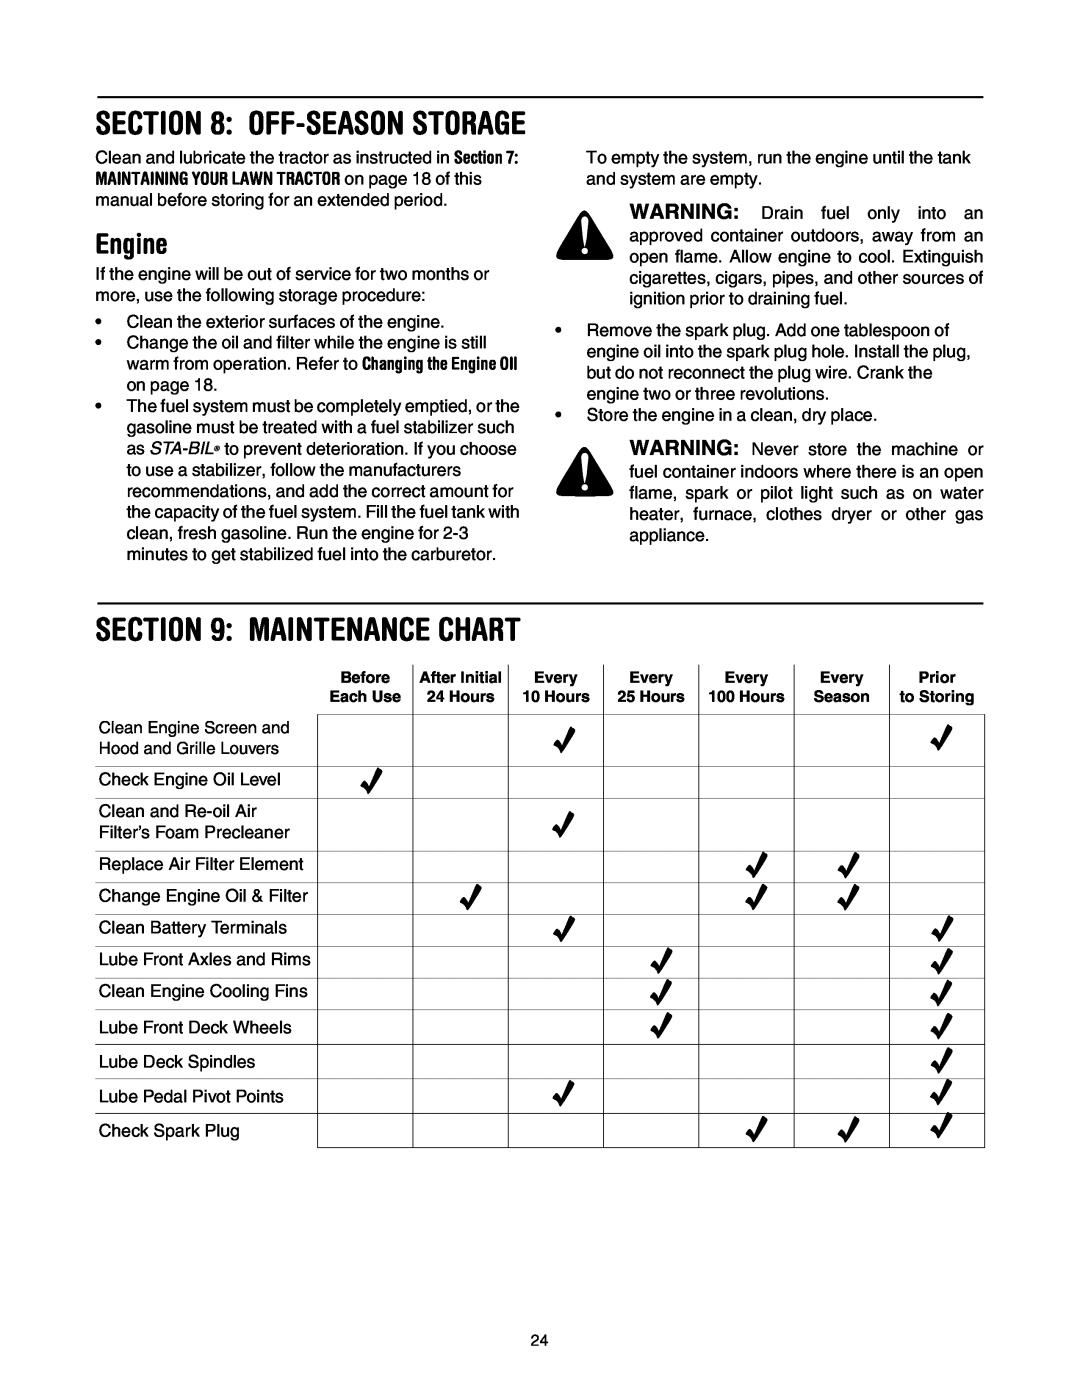 Bolens LT1024 manual Off-Seasonstorage, Engine, Maintenance Chart 